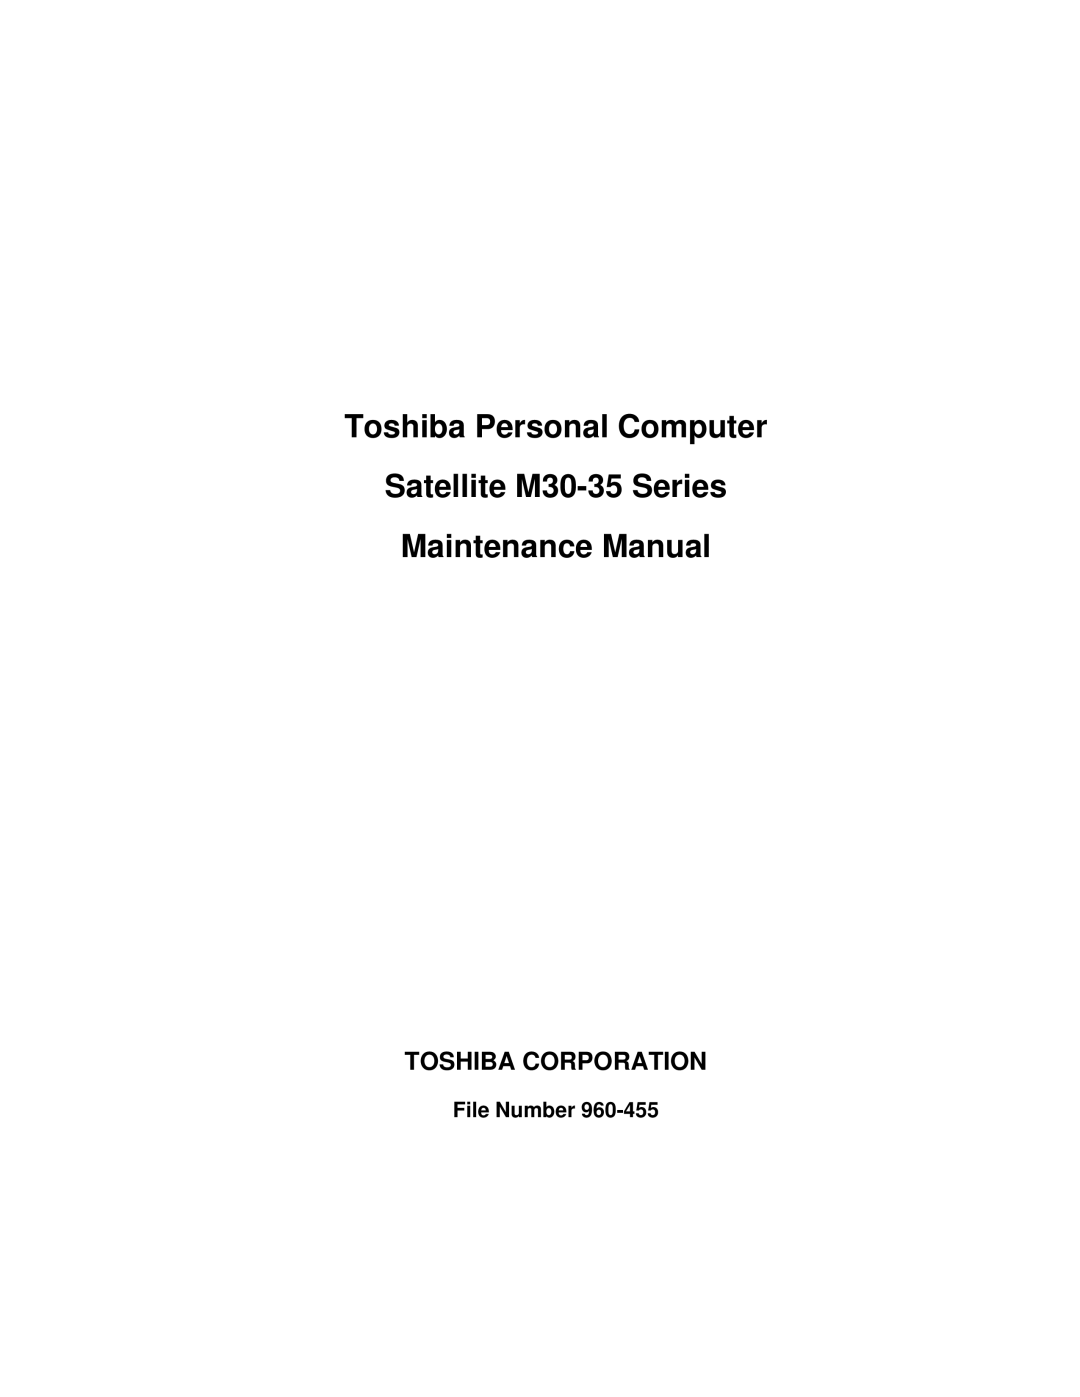 Toshiba M30-35 manual Toshiba Corporation 